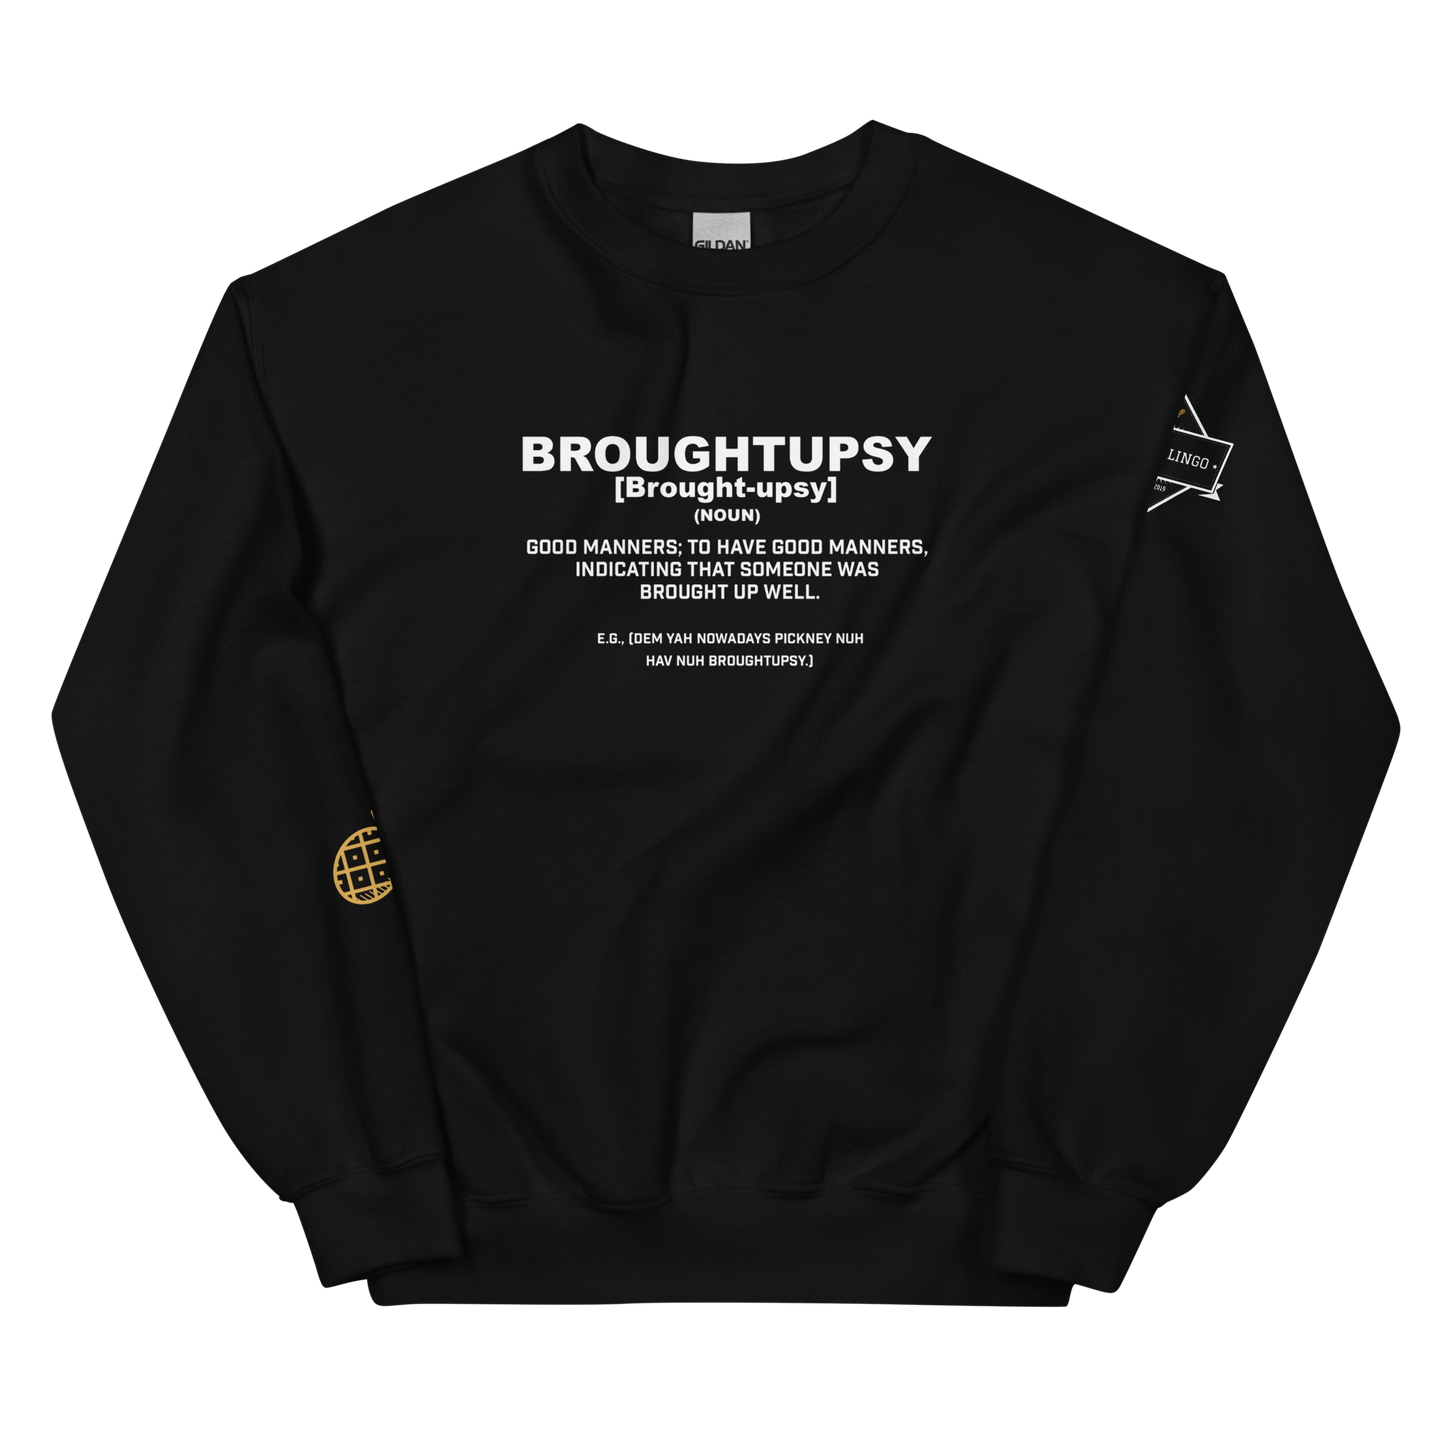 Broughtupsy Unisex Sweatshirt